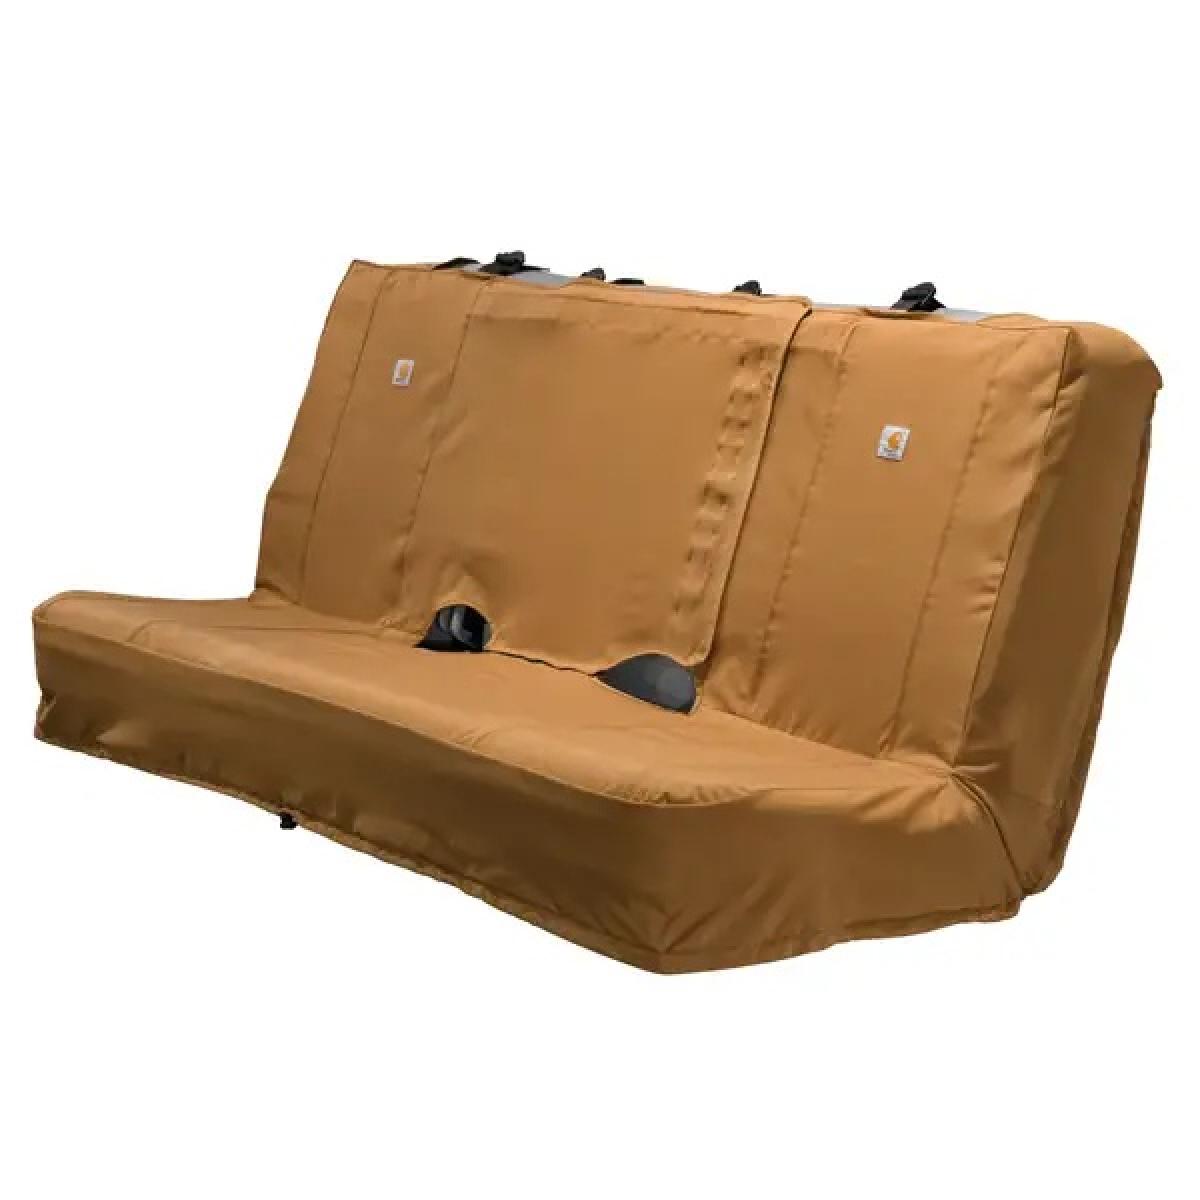 Carhartt Full Bench Seat Cover